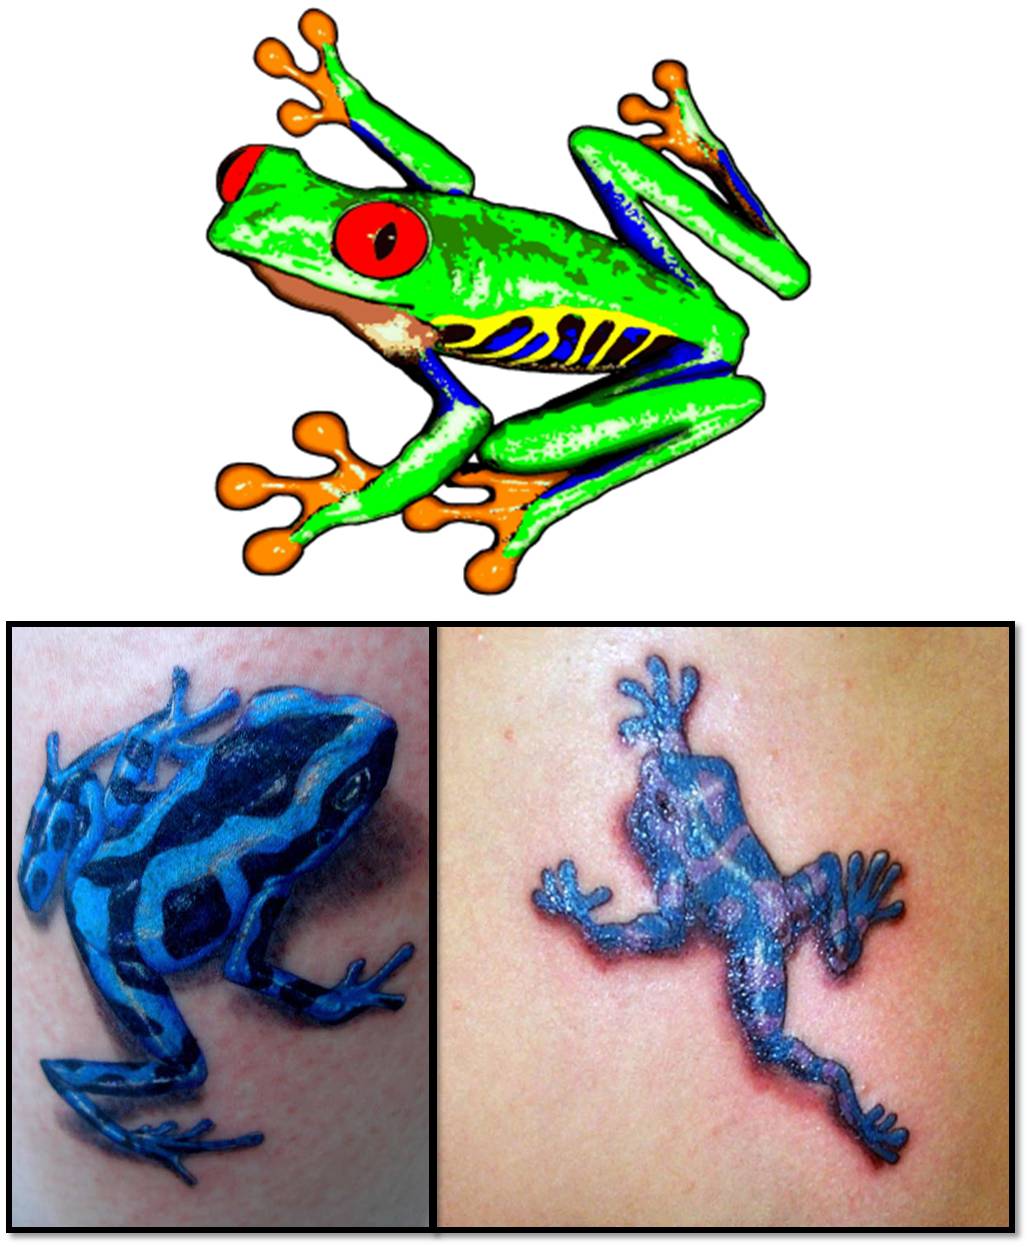 tree frog tattoo by Ventiscaseer on DeviantArt